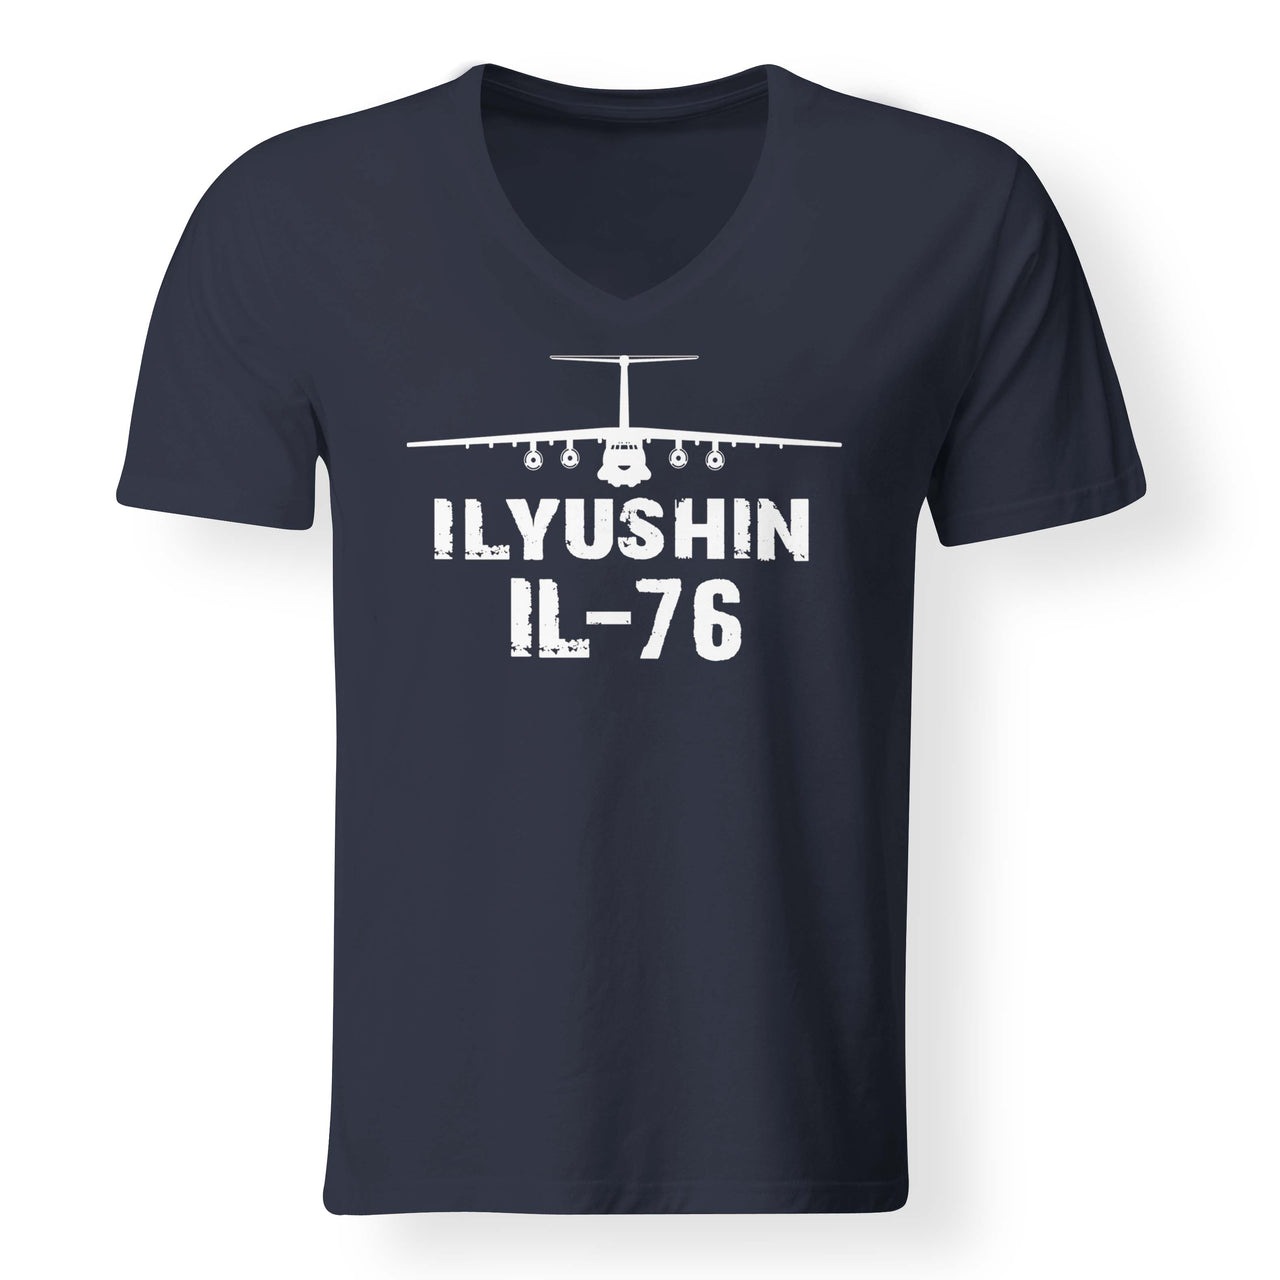 ILyushin IL-76 & Plane Designed V-Neck T-Shirts